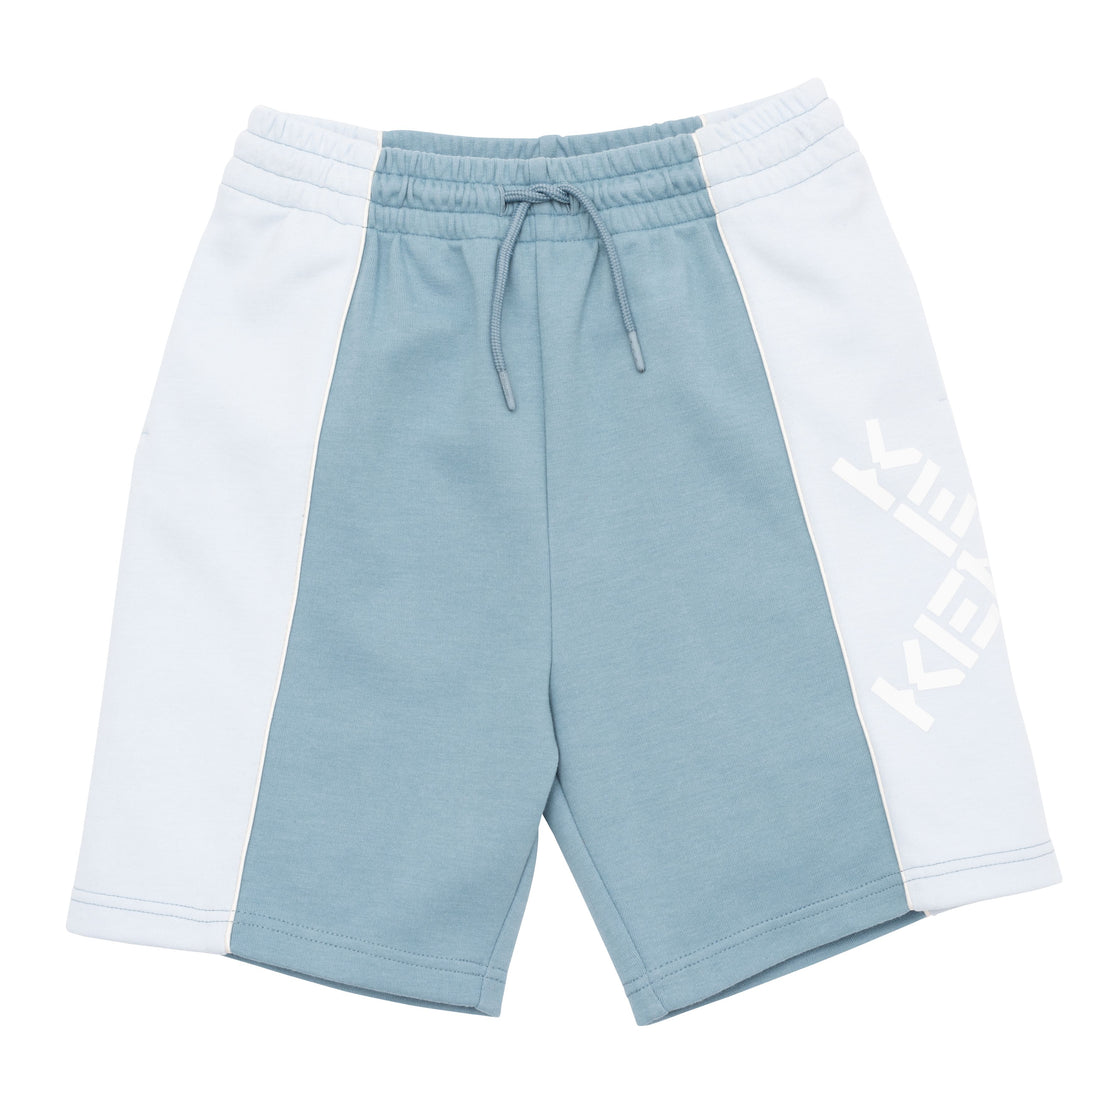 Kenzo Bermuda Shorts Style: K24238